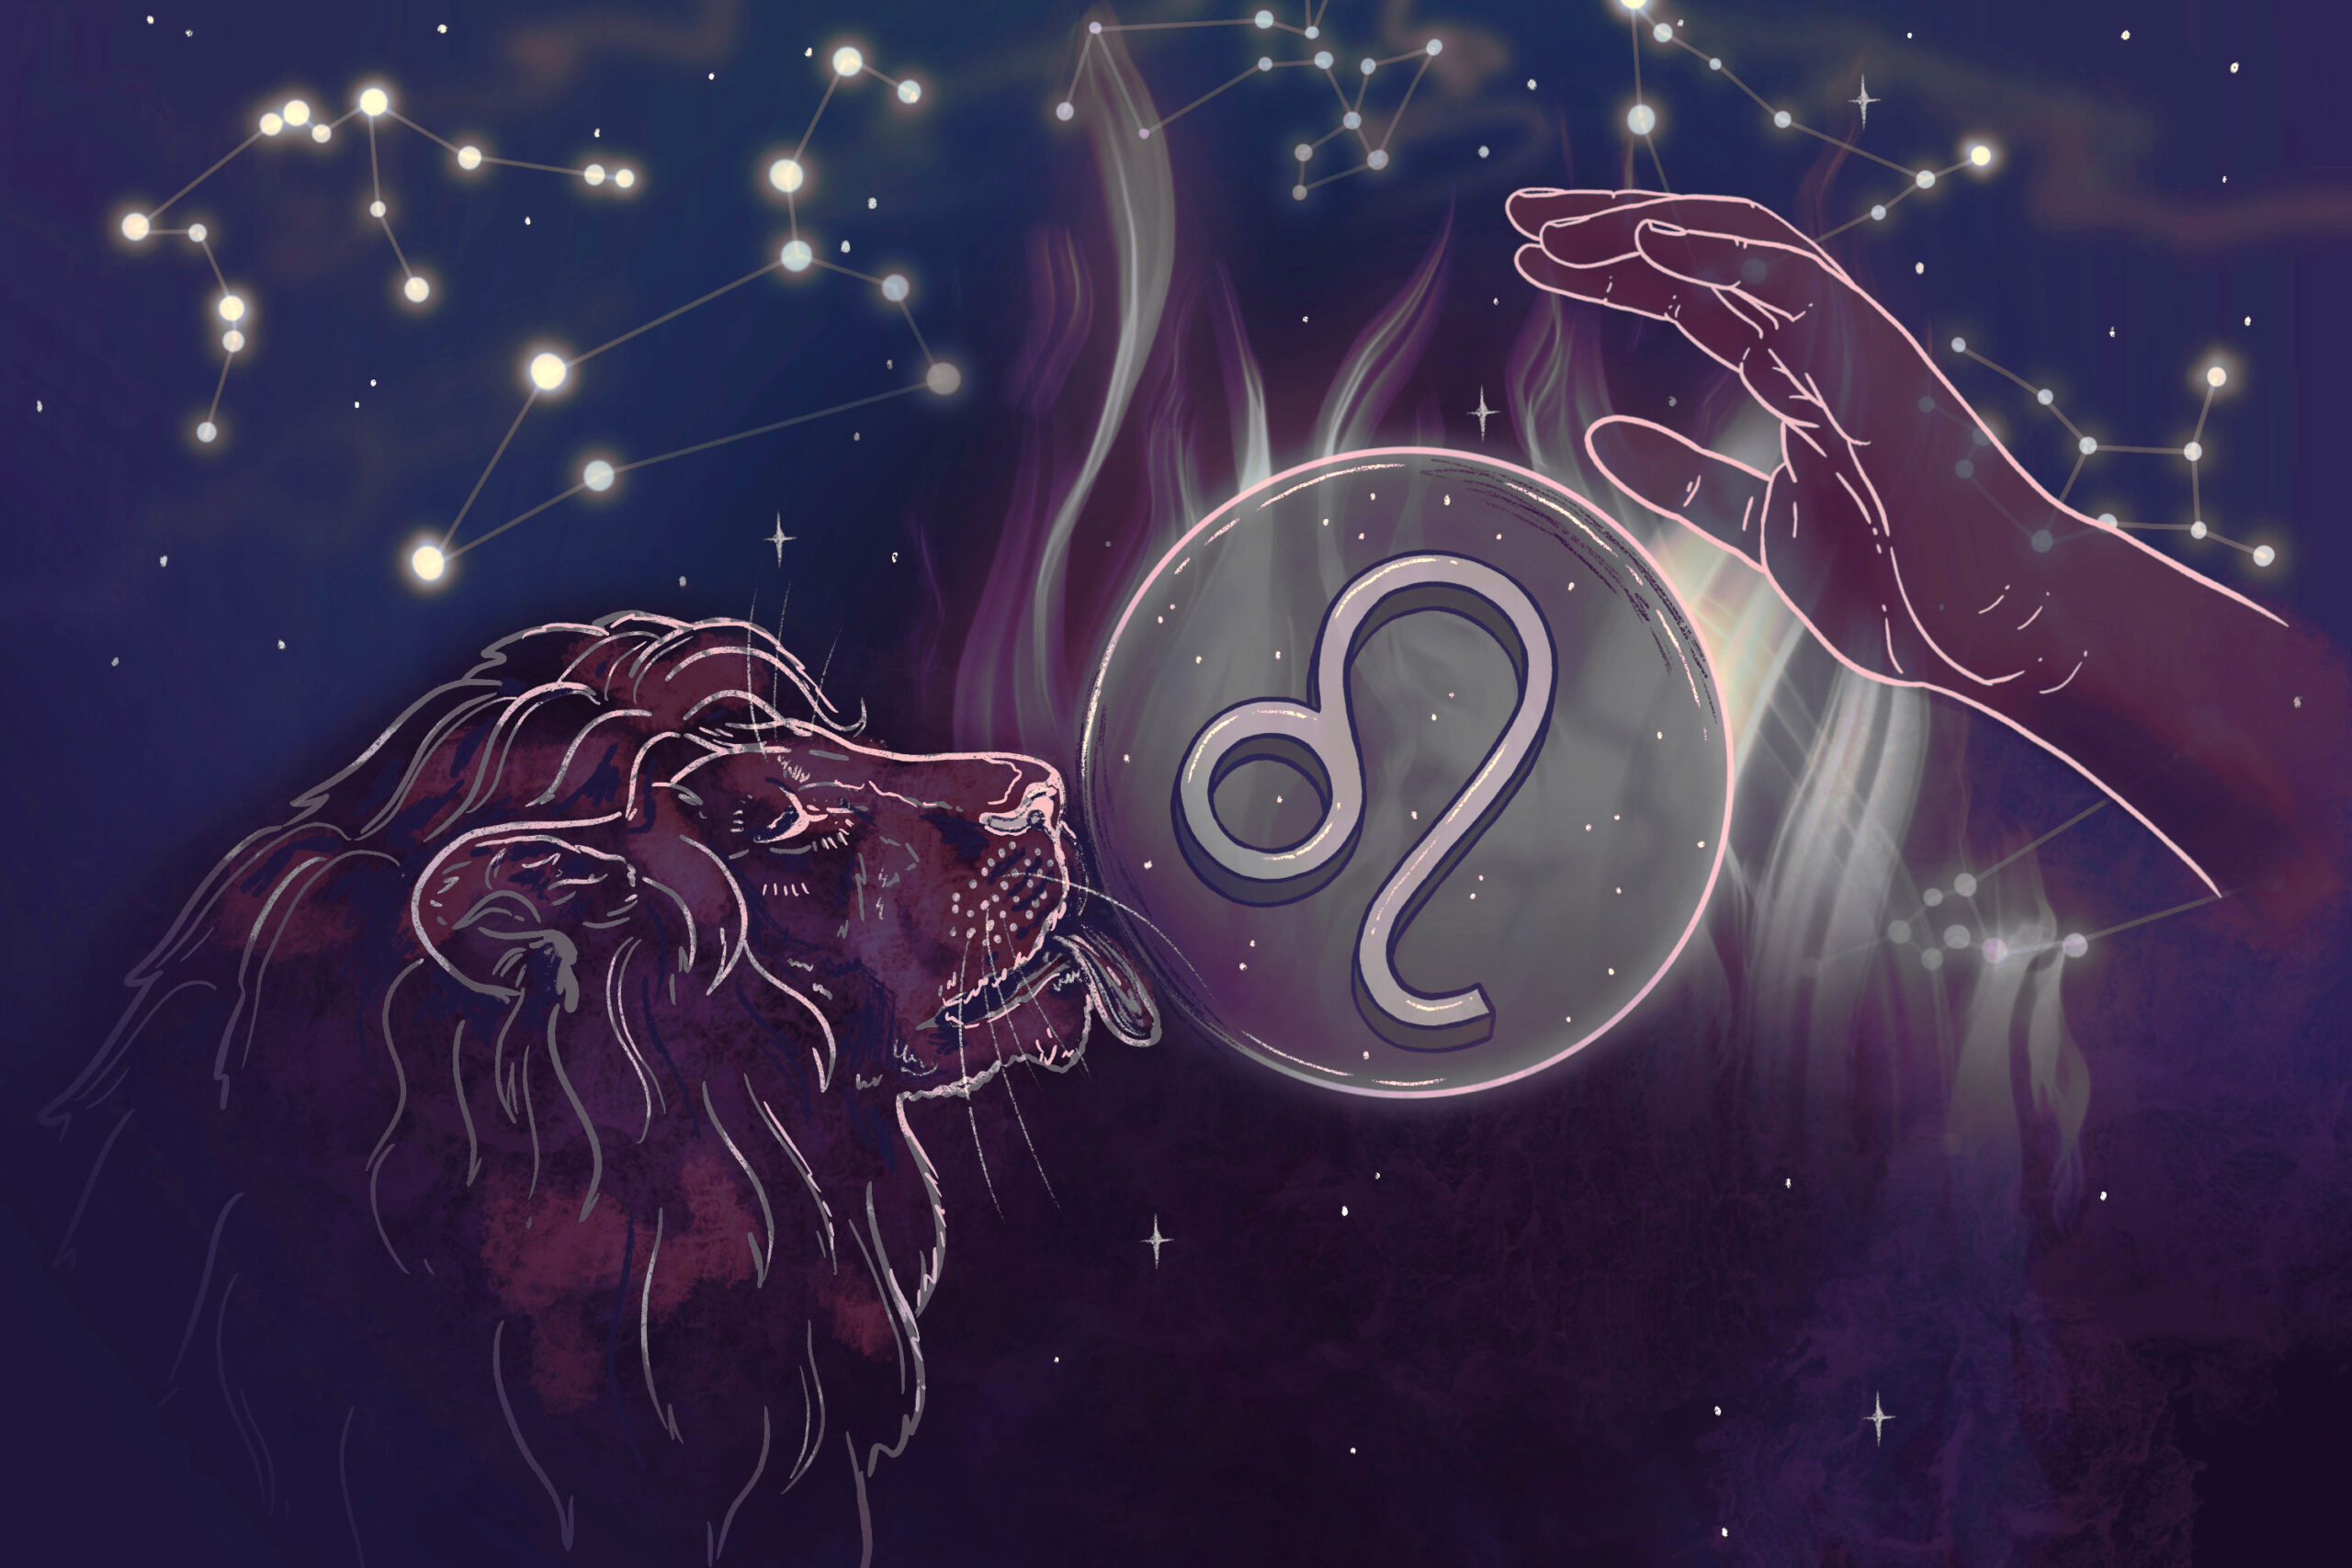 gal-dem horoscopes: Find authenticity this Leo season